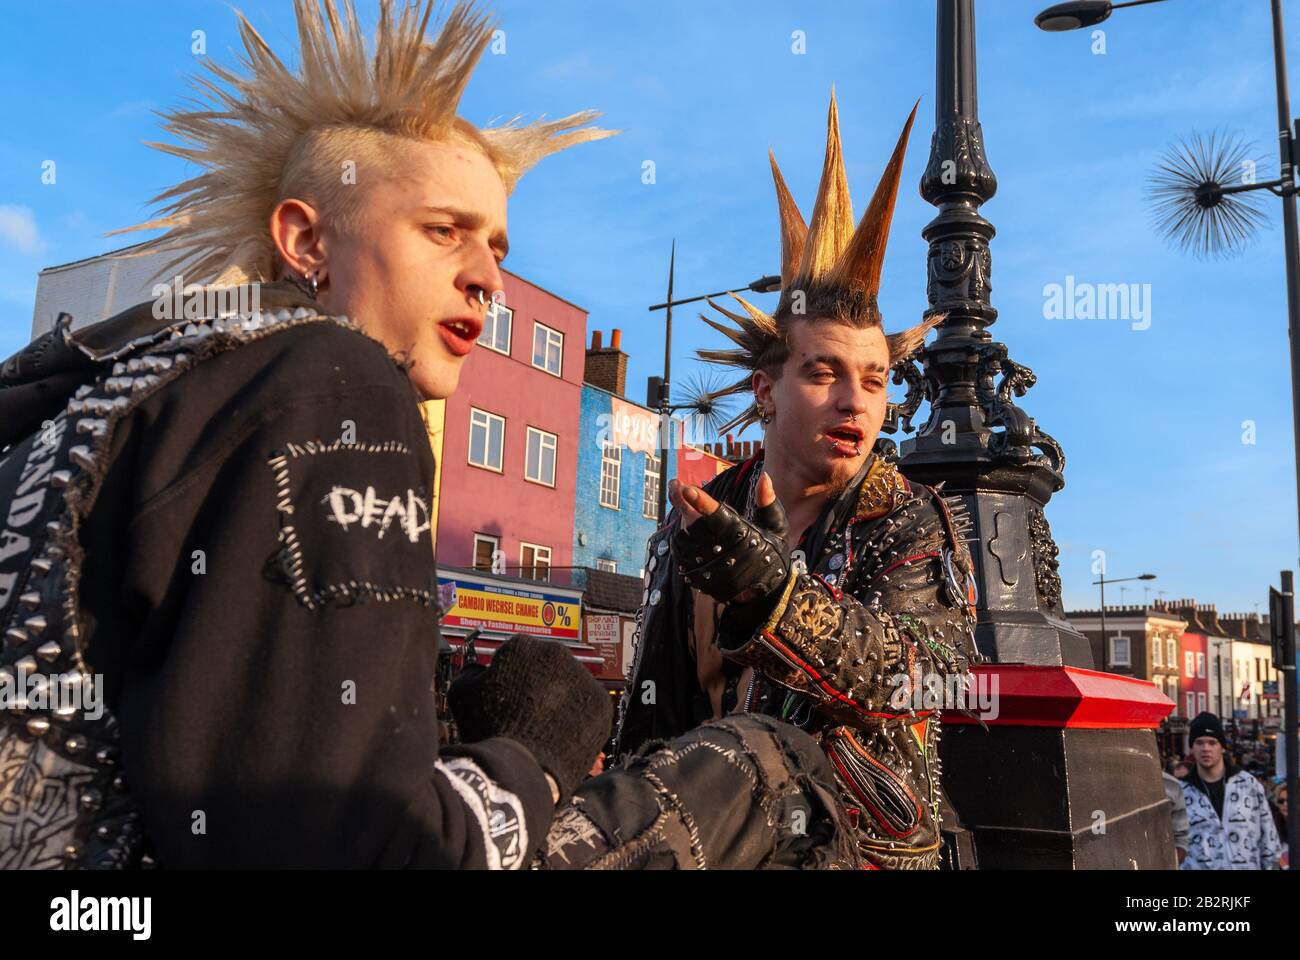 Punks with spiky hair at Camden Market, London, UK Stock Photo